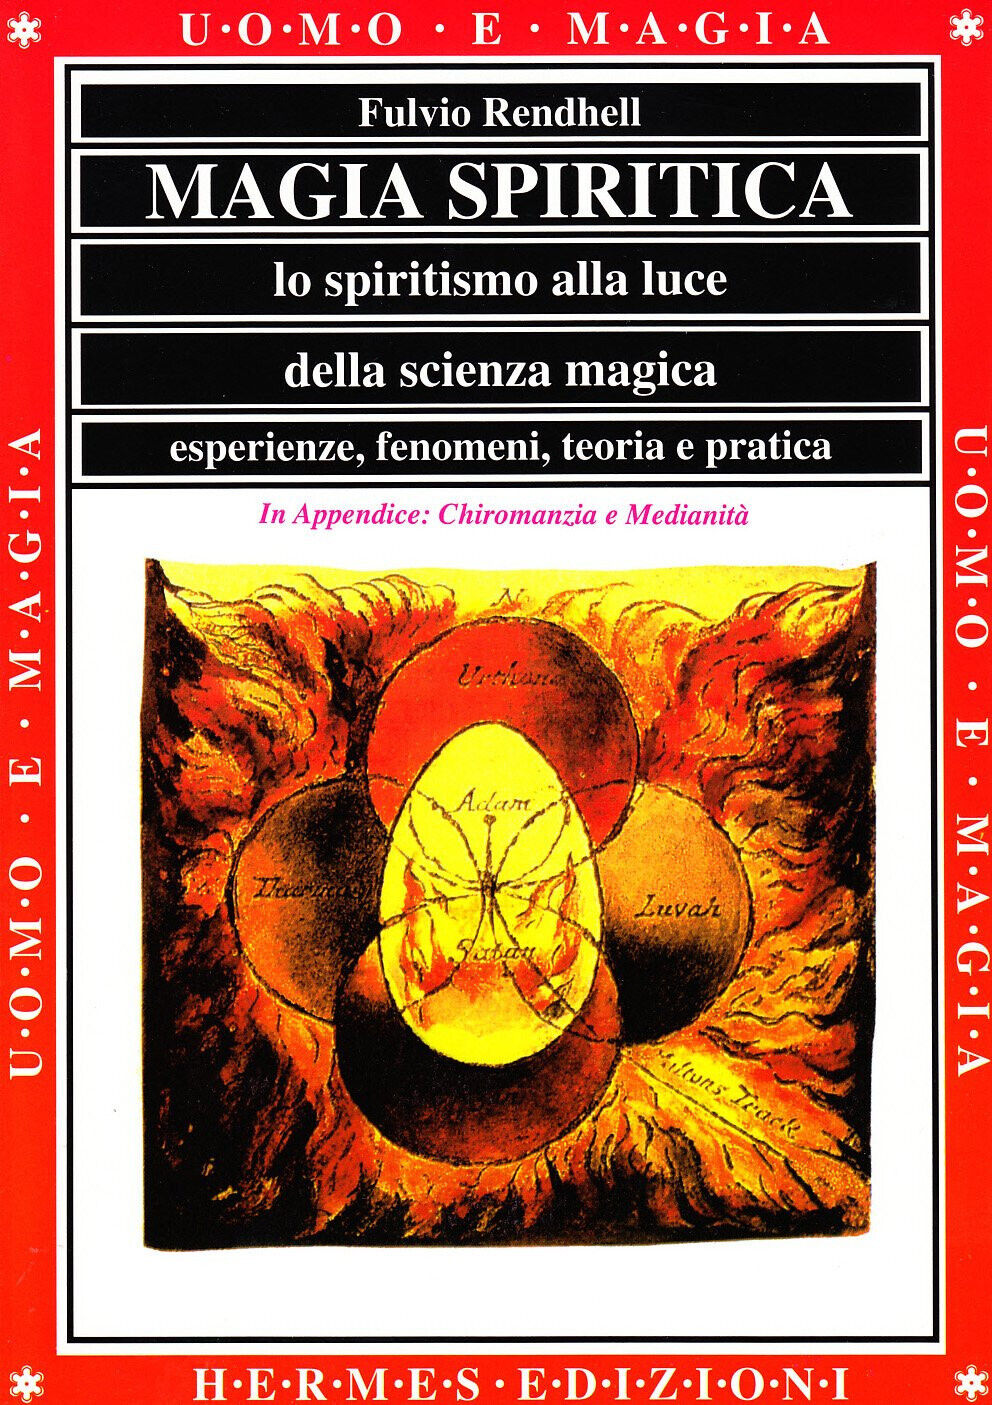 Magia spiritica - Fulvio Rendhell - Hermes, 1997